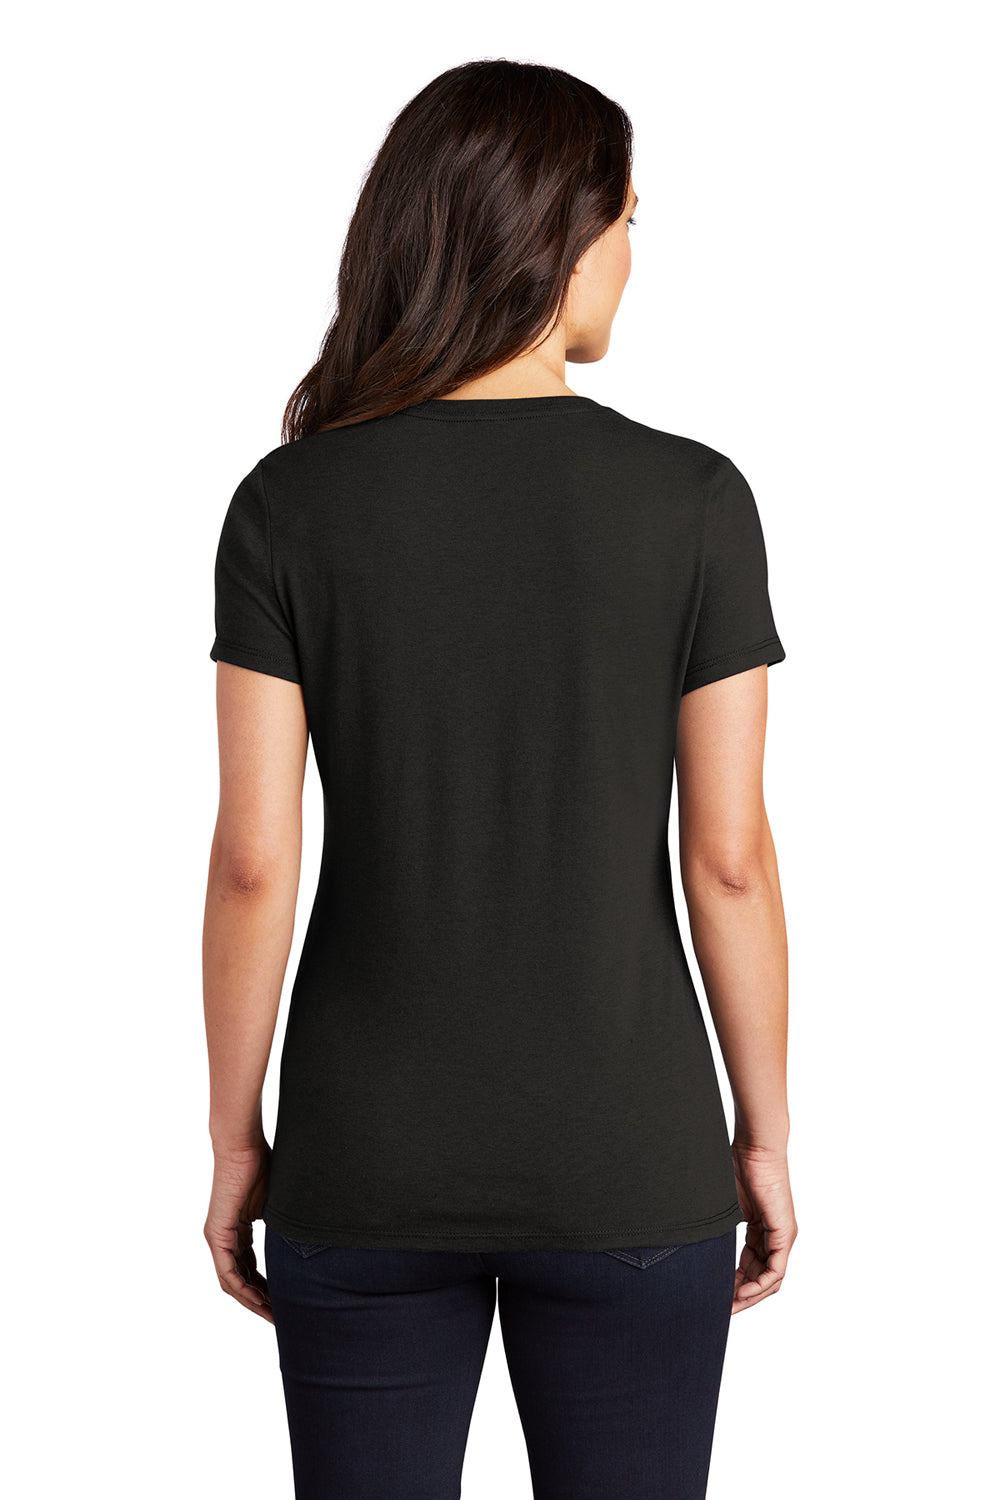 District DM130L Womens Perfect Tri Short Sleeve Crewneck T-Shirt Black Back